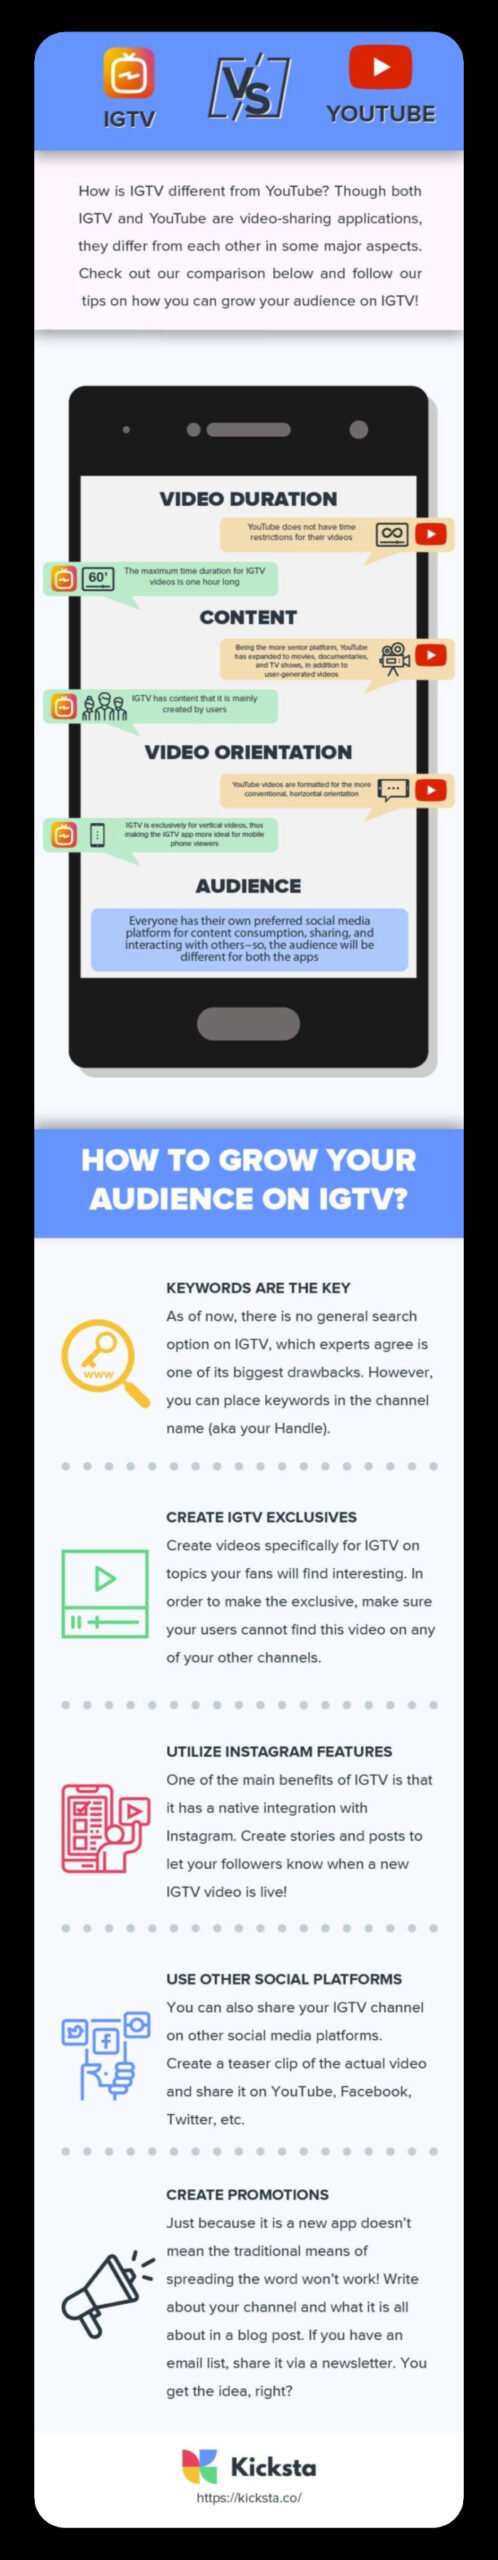 IGTV vs YouTube Infographic